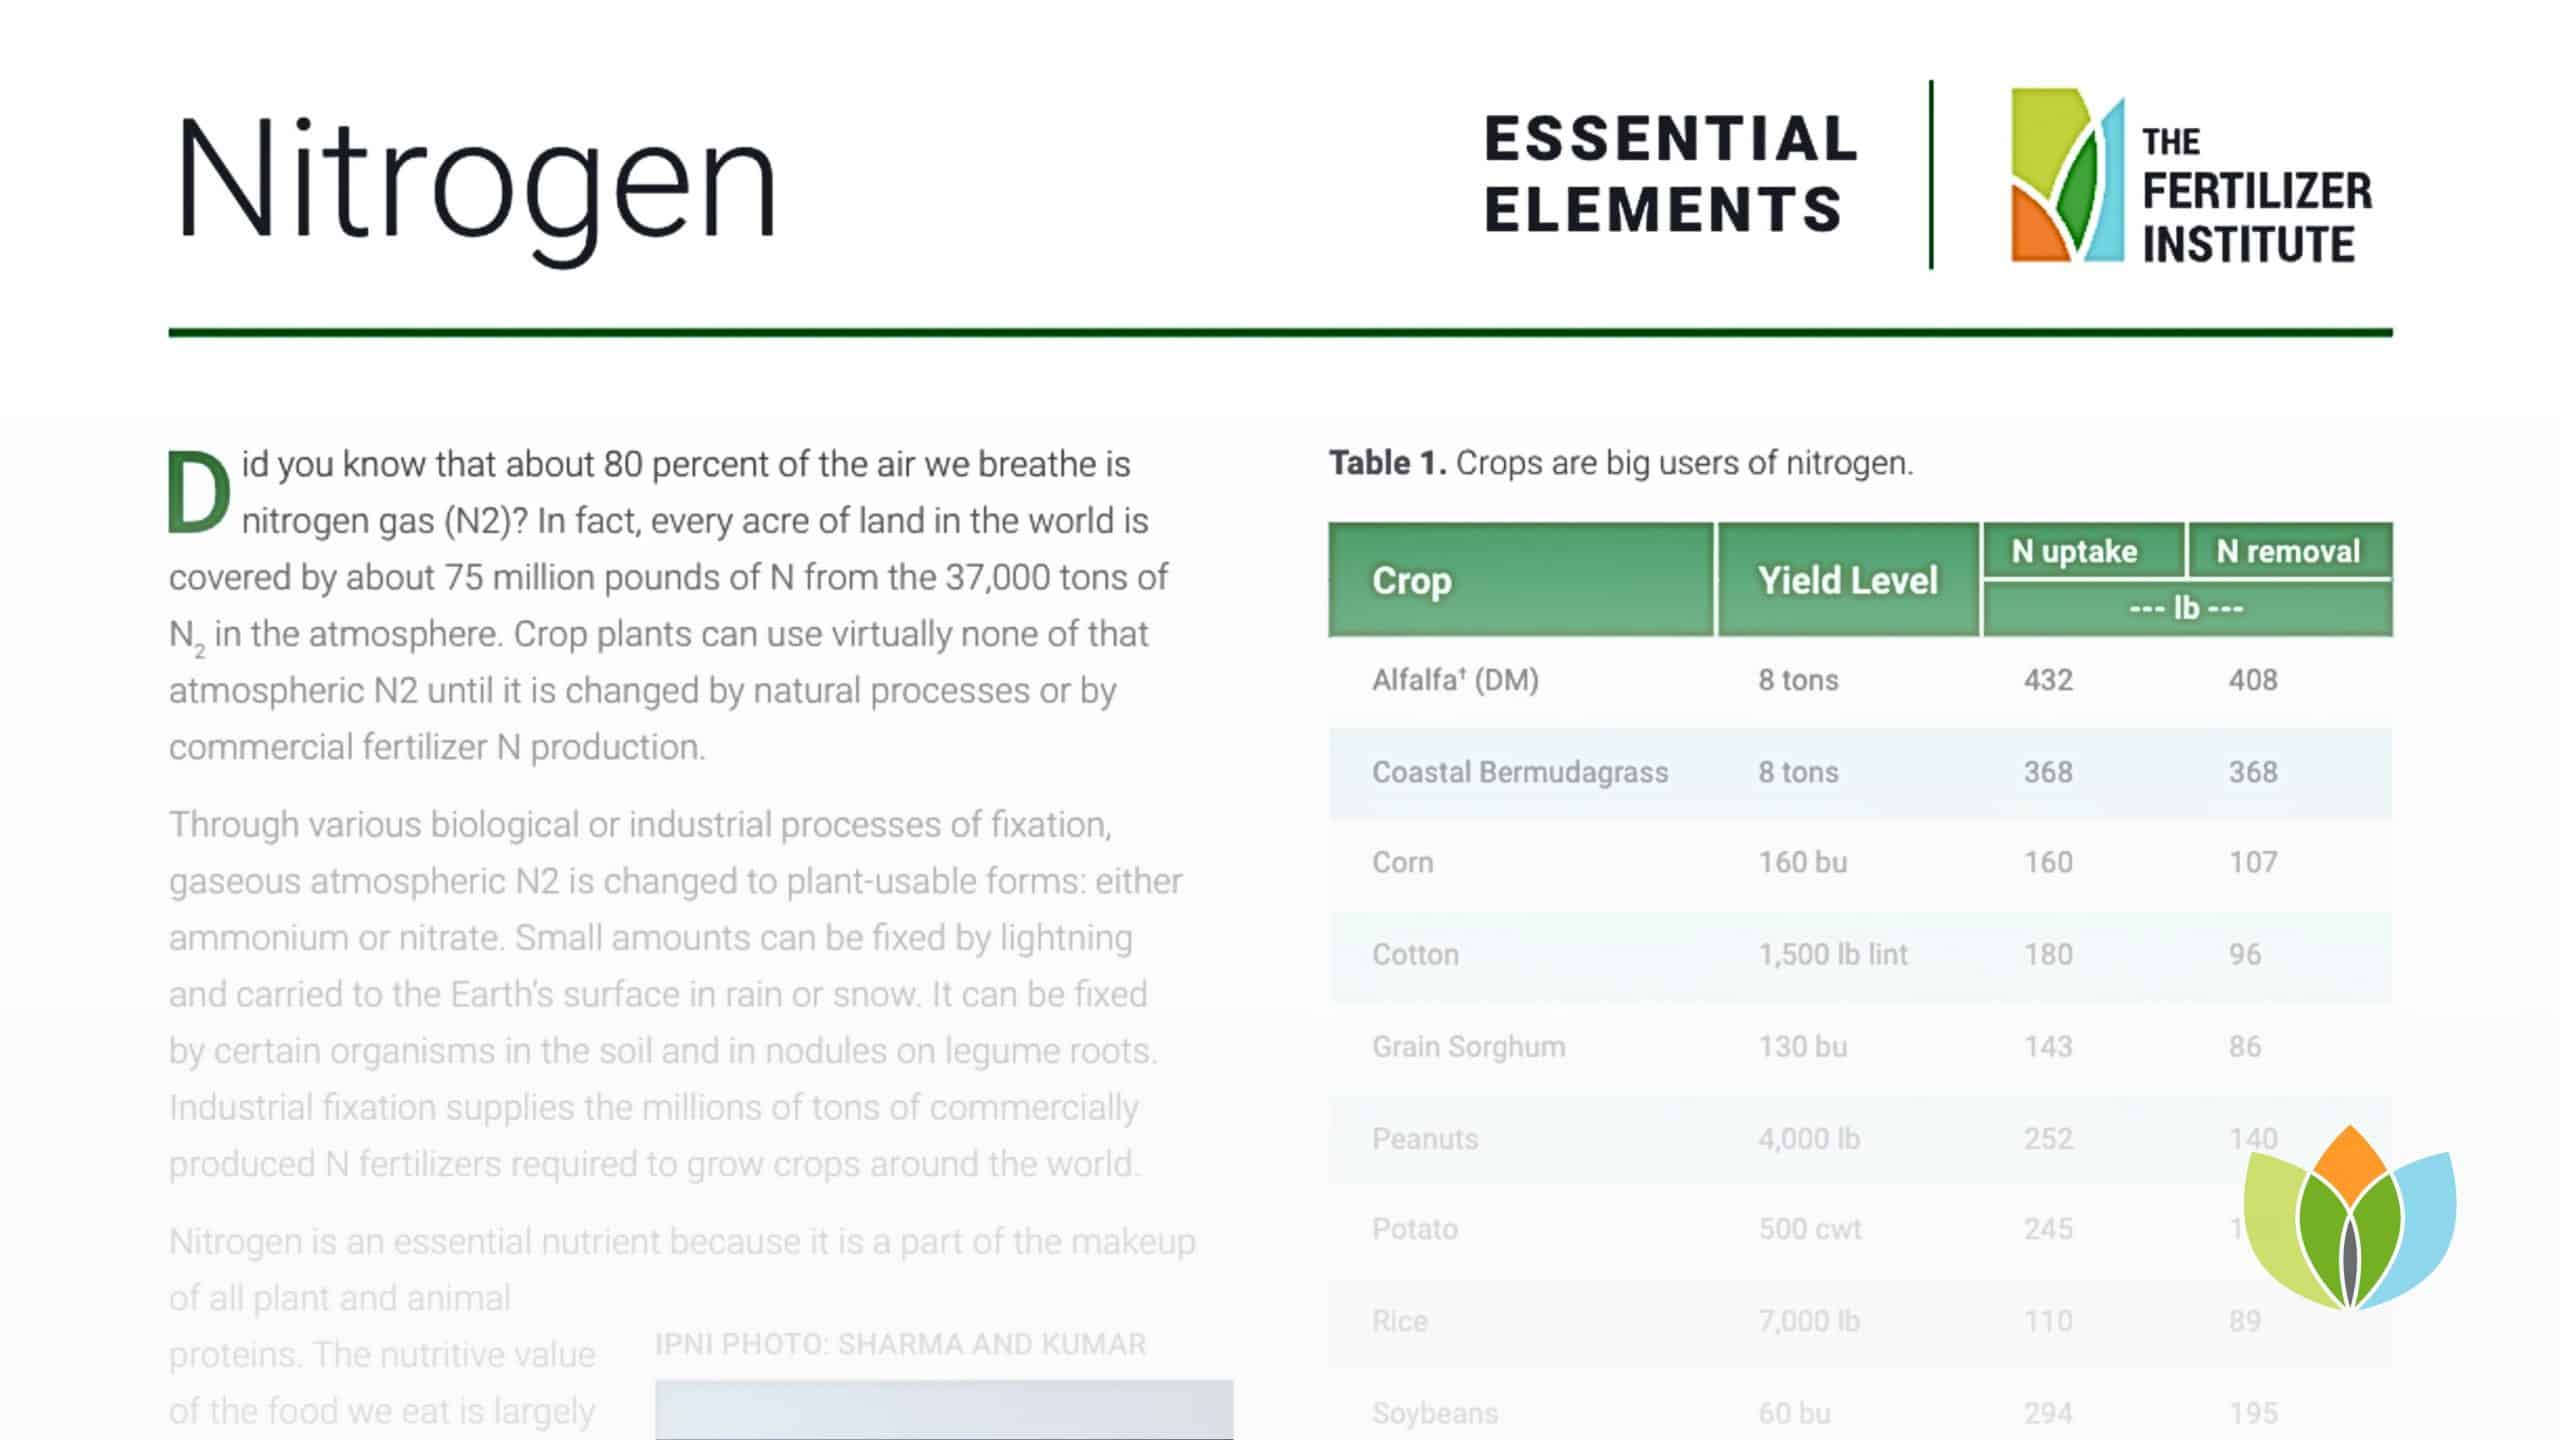 Essential Elements: Nitrogen